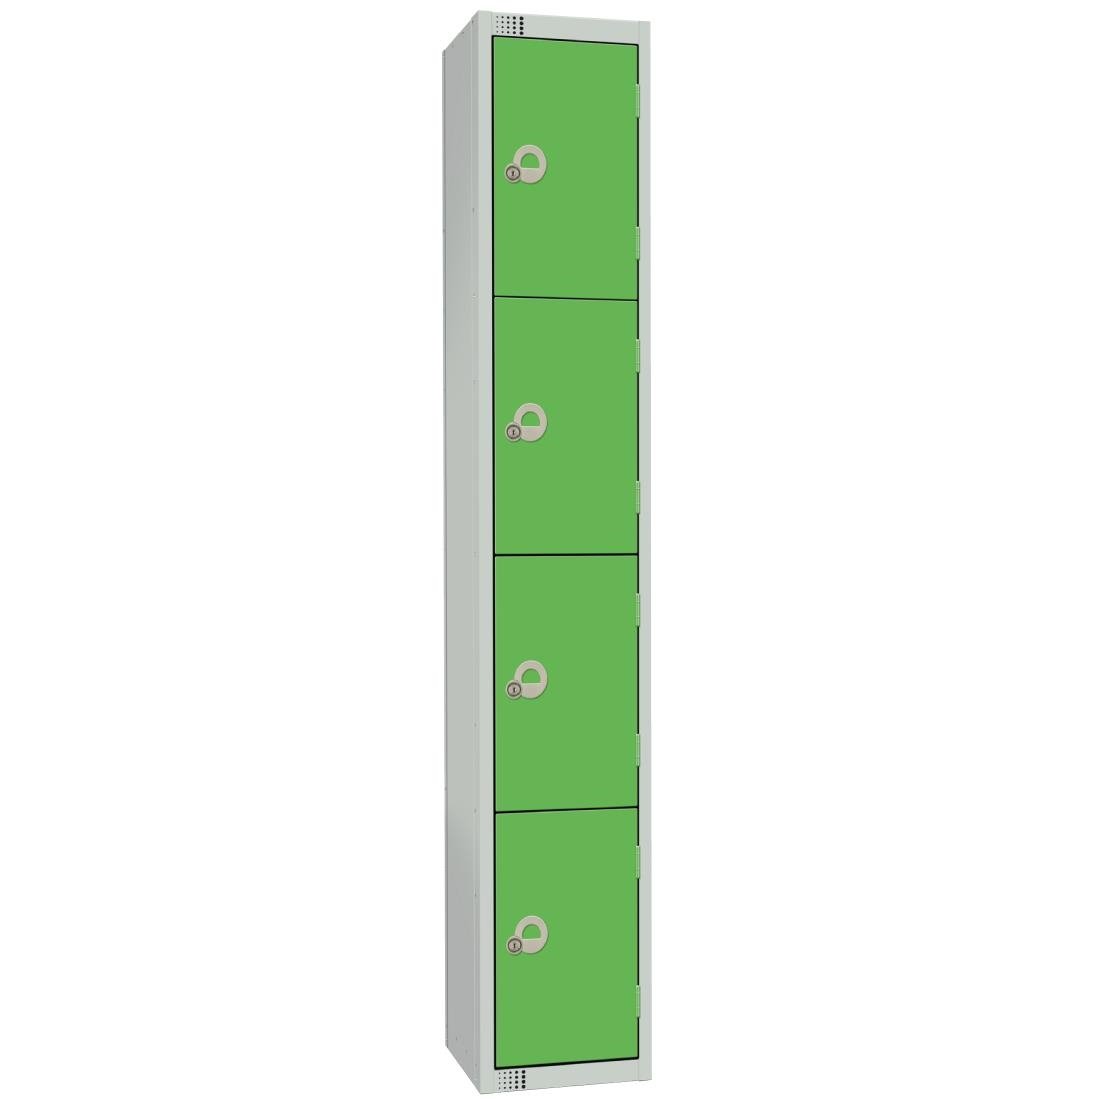 W987-ELS Elite Four Door Electronic Combination Locker with Sloping Top Green